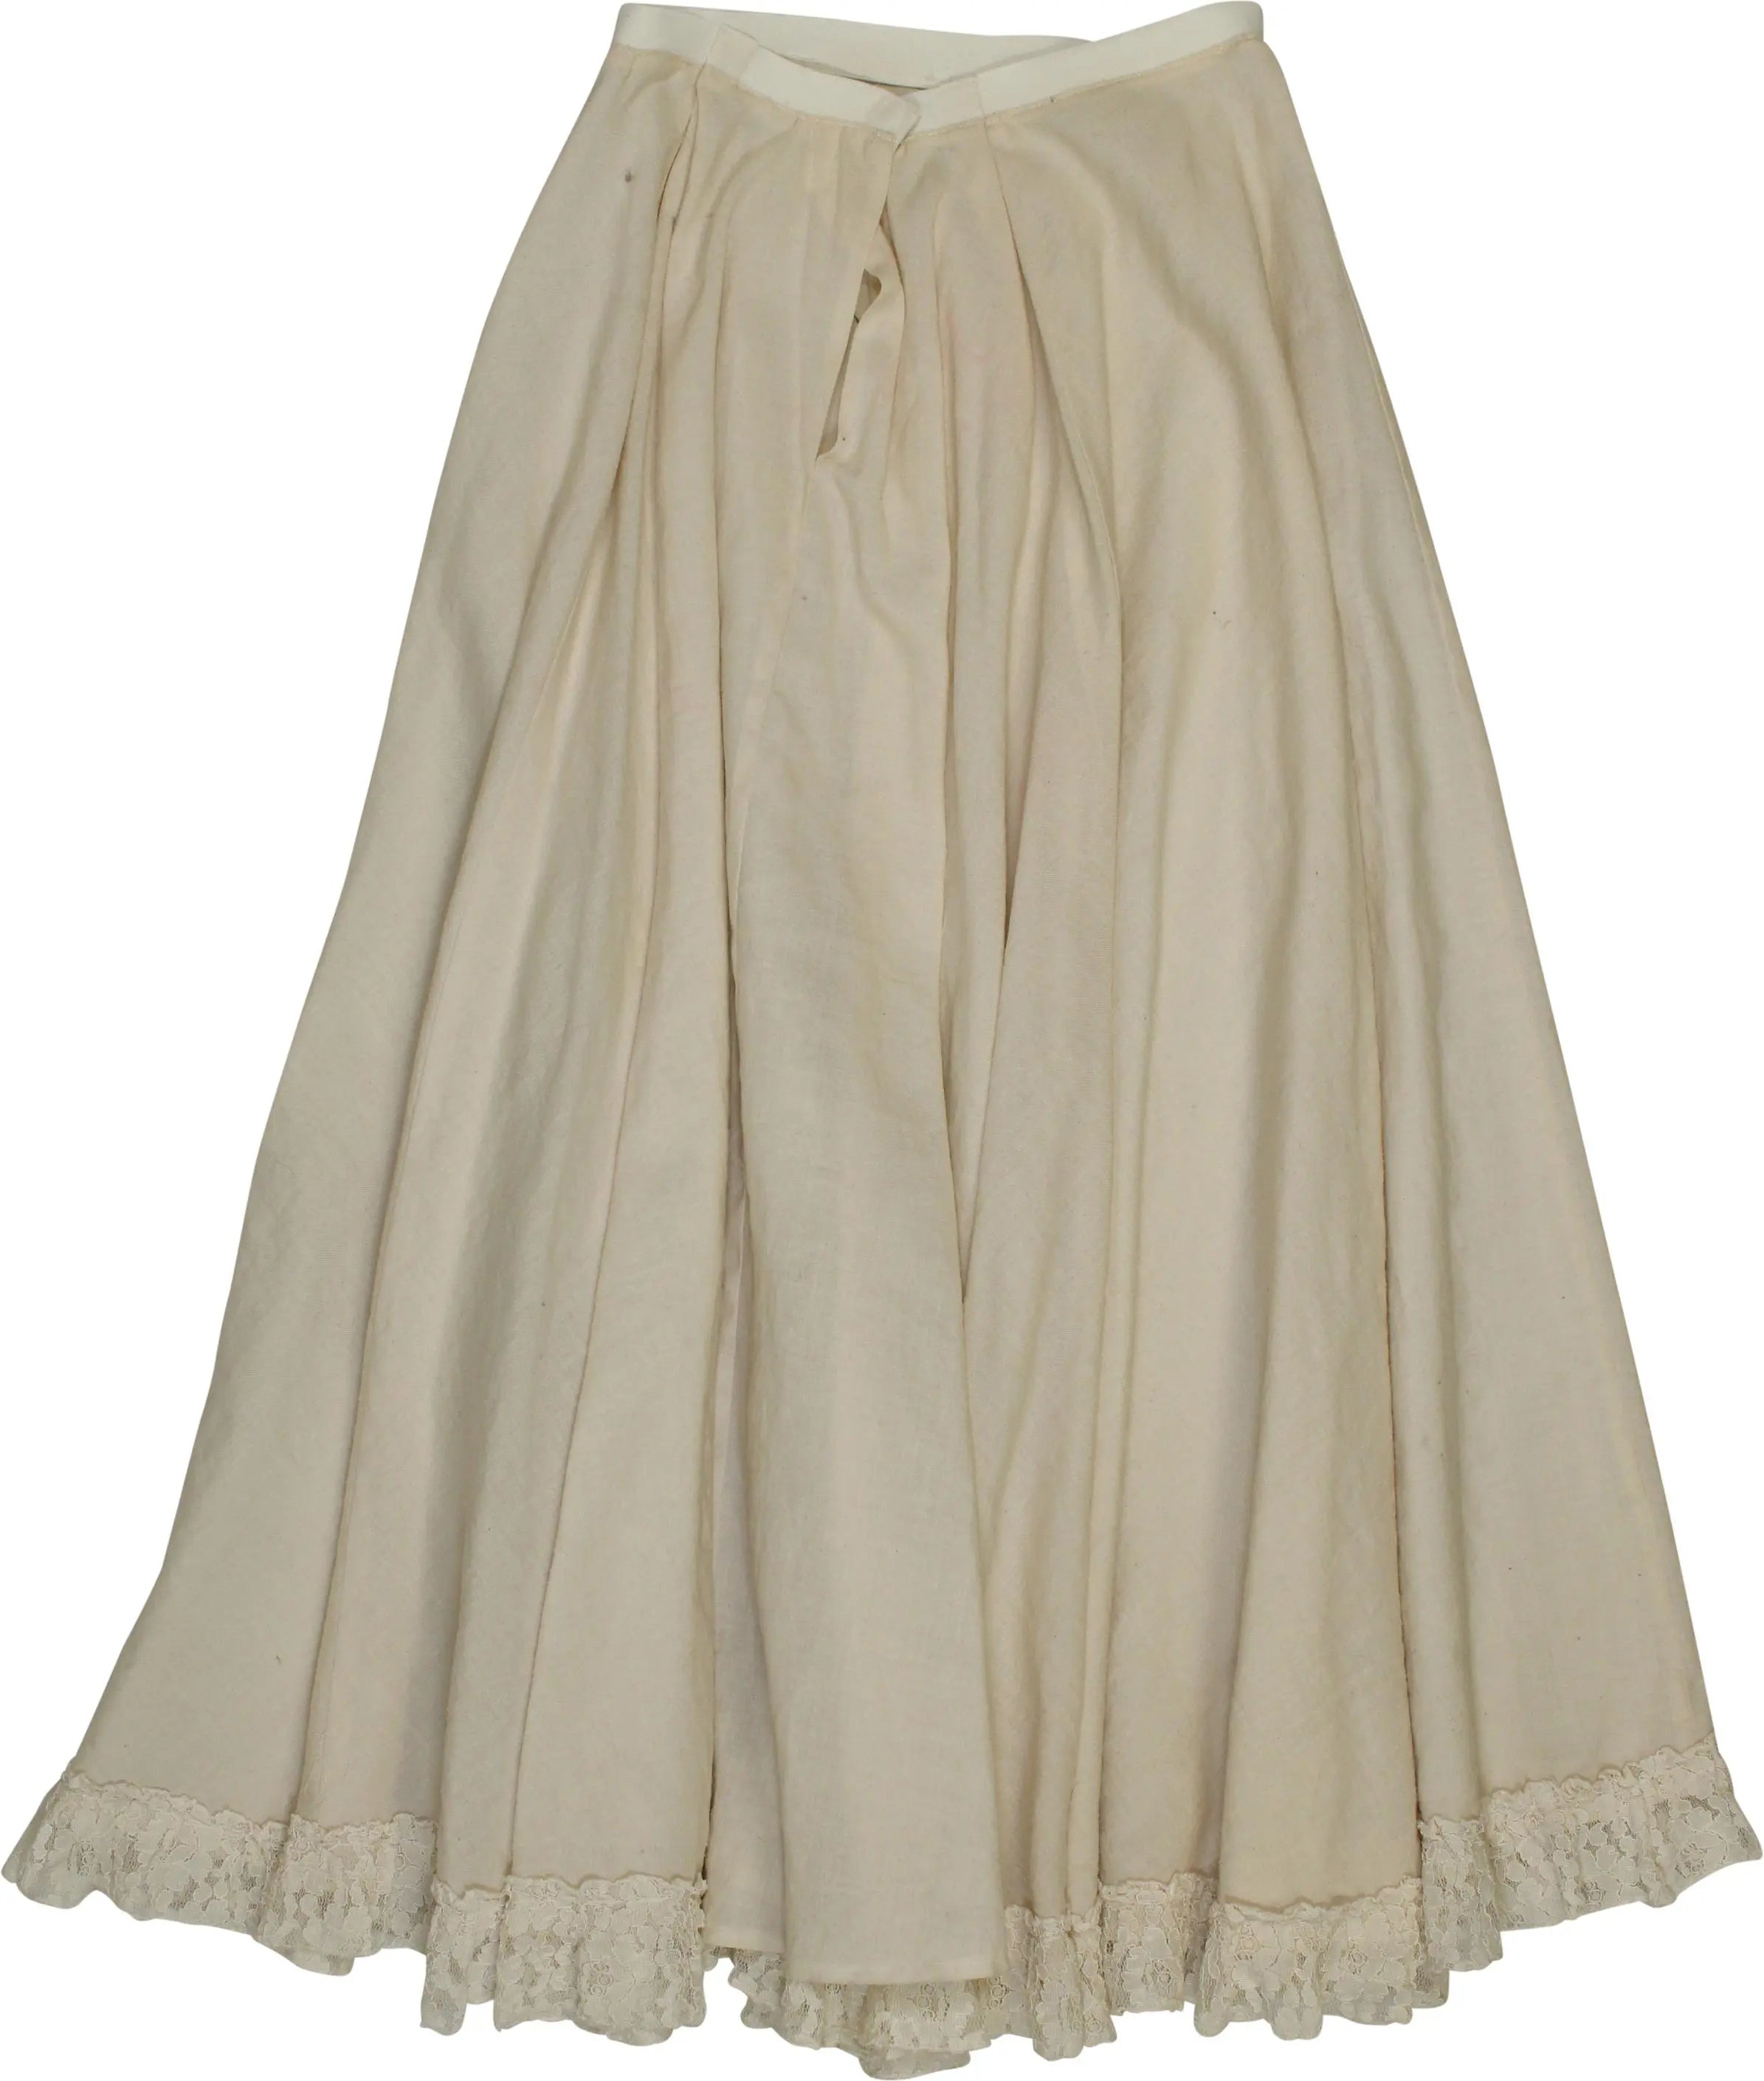 Handmade - Handmade Cotton Maxi Slip Skirt- ThriftTale.com - Vintage and second handclothing